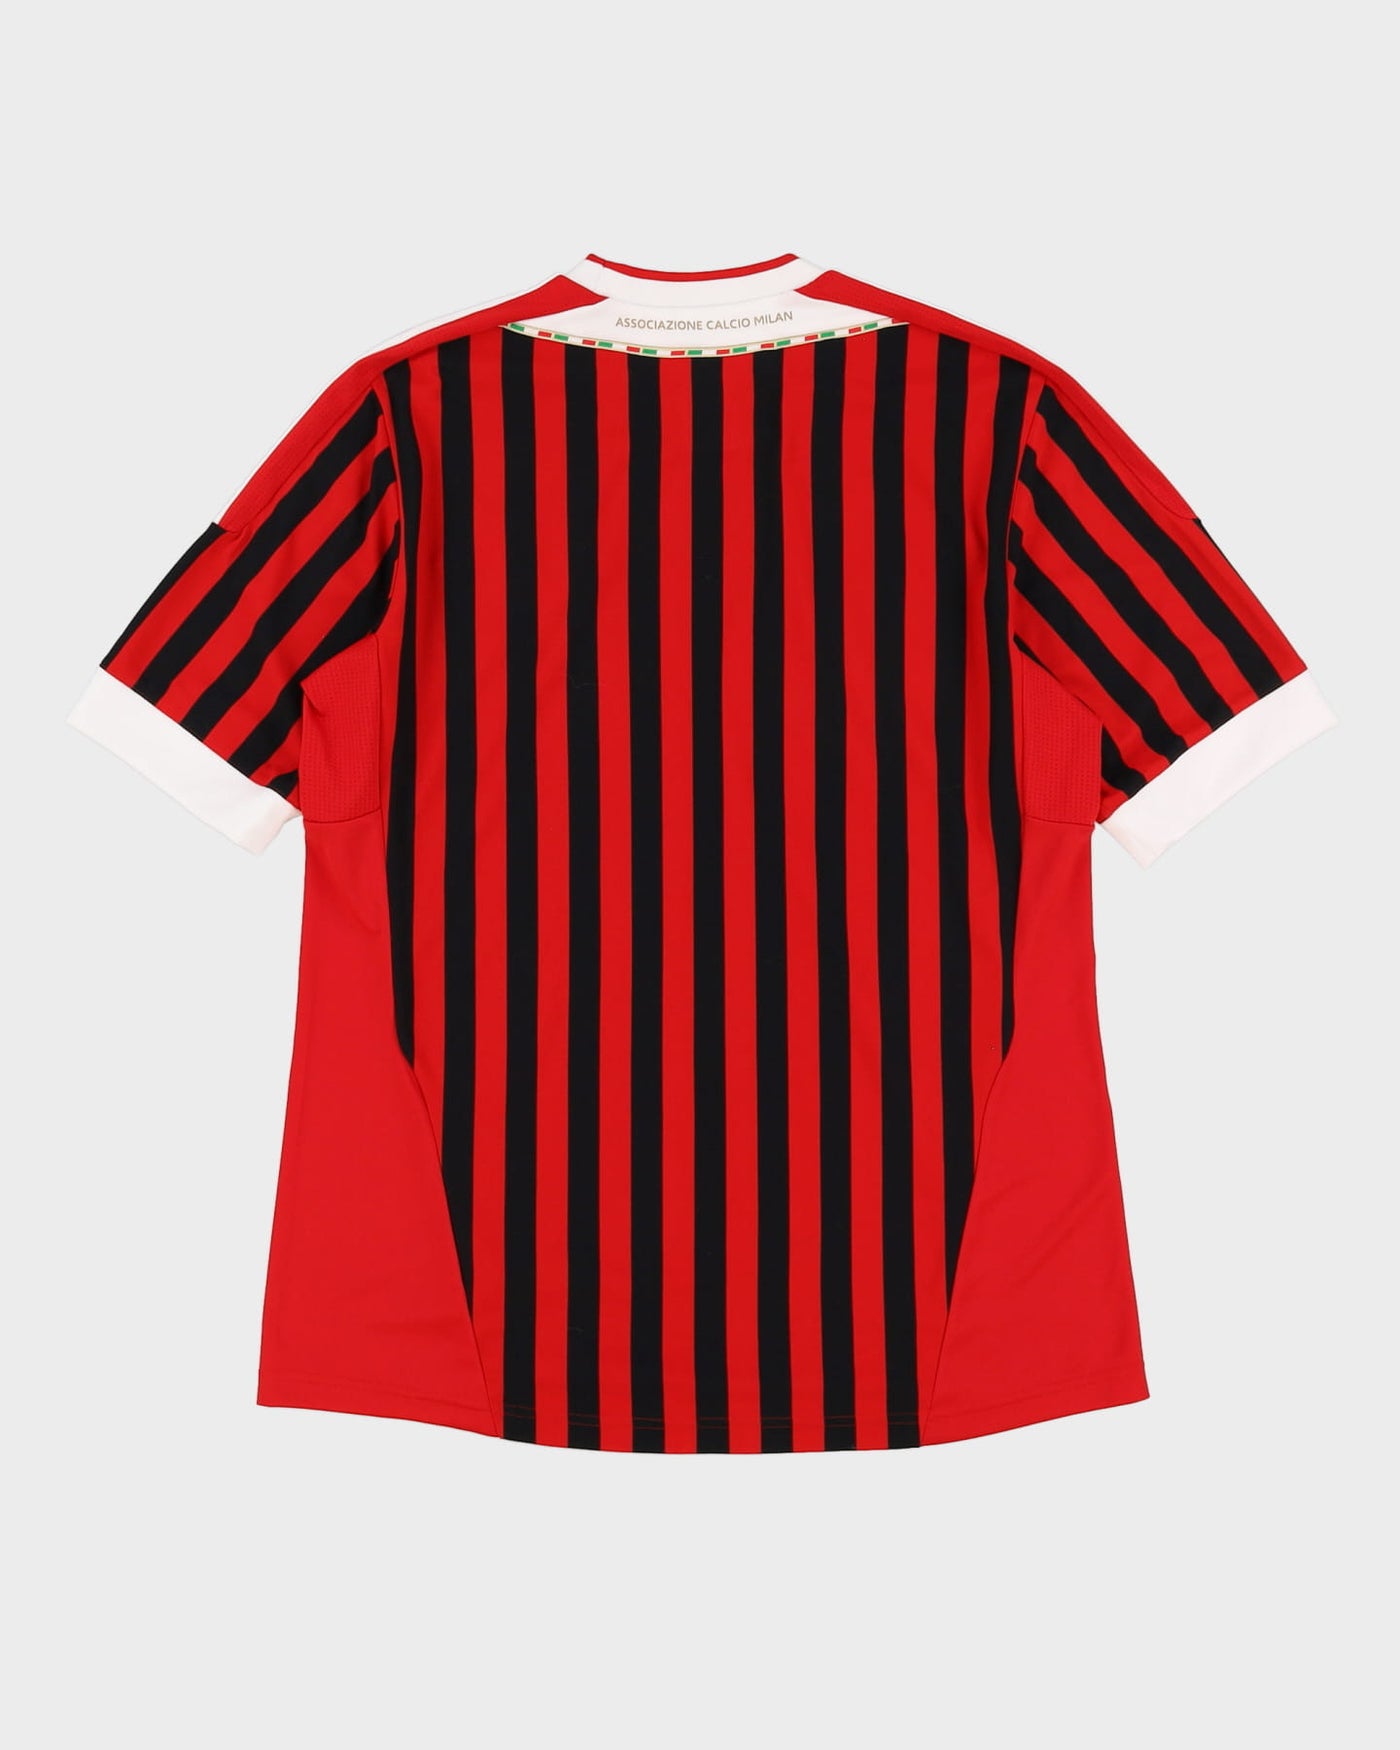 2011-12 AC Milan Adidas Black / Red Home Kit / Football Shirt / Jersey - L